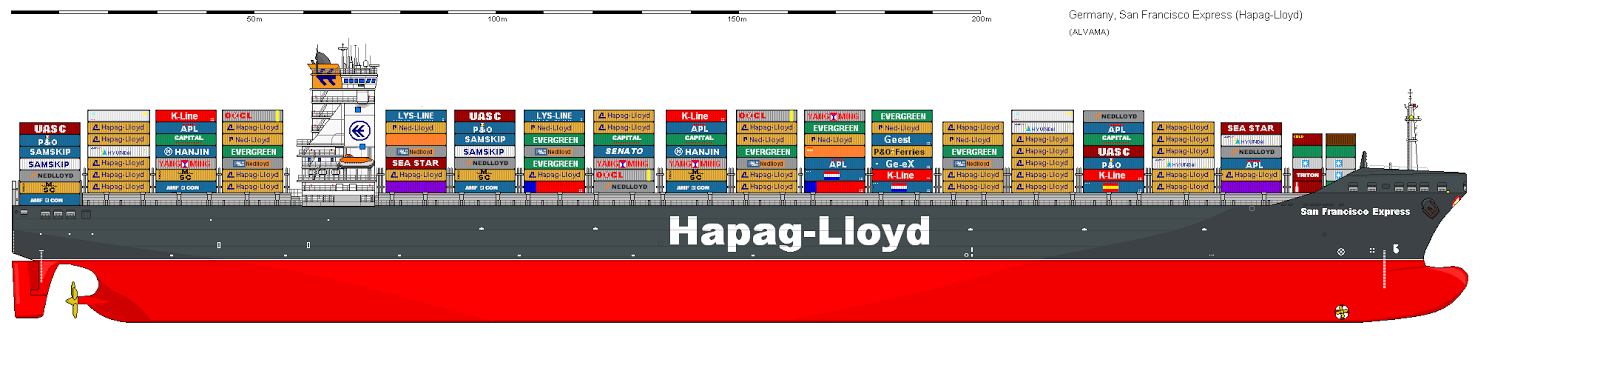 Hapag-Lloyd Shipping Lines